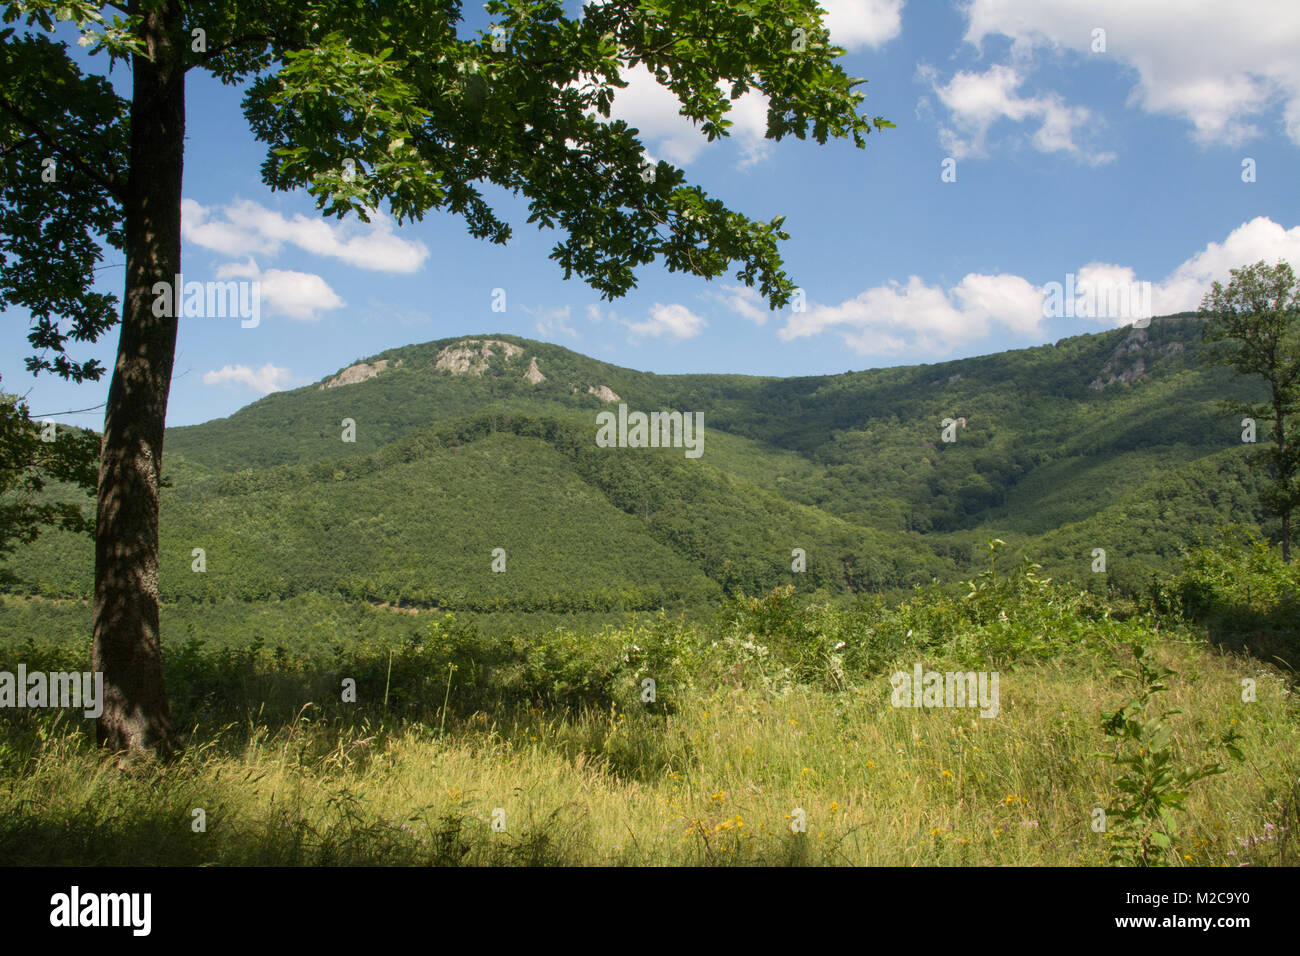 Forested mountain scenery in the Bukk National Park (Bükki Nemzeti Park) in northern Hungary, Europe Stock Photo